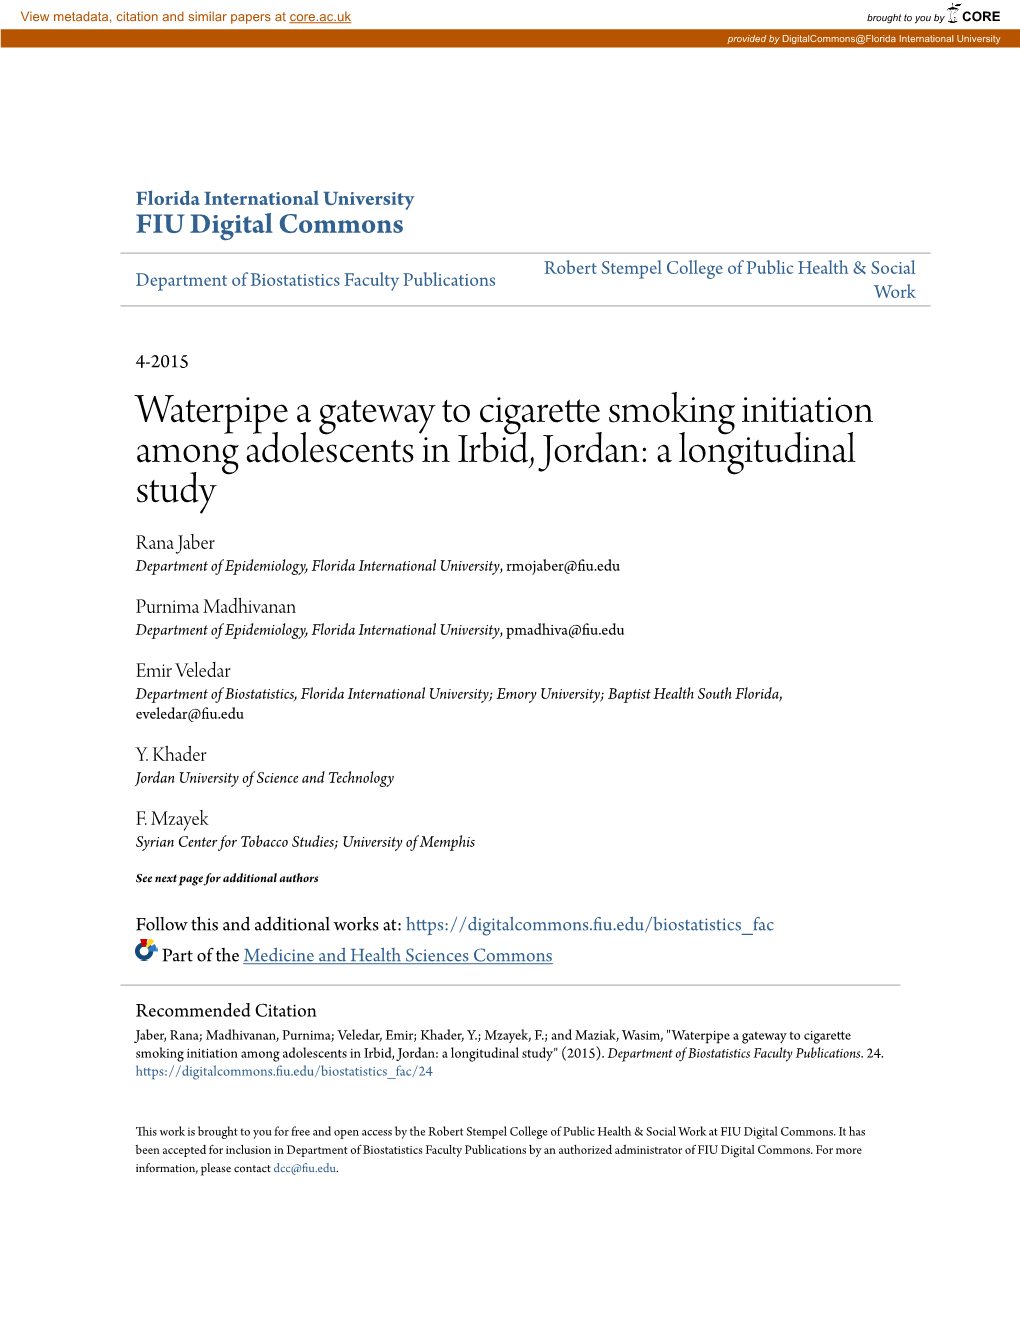 Waterpipe a Gateway to Cigarette Smoking Initiation Among